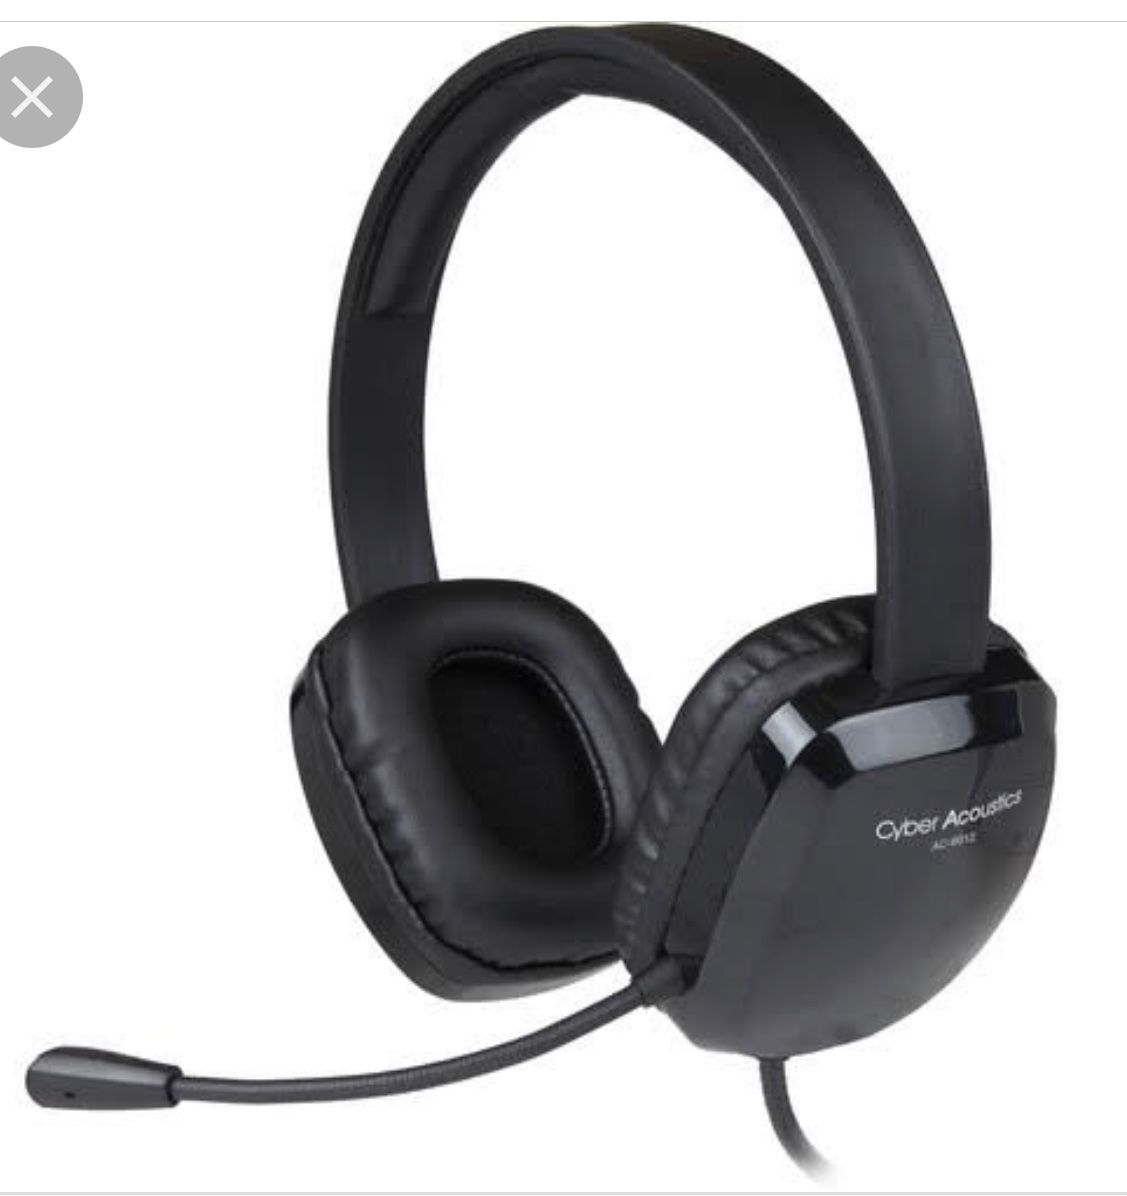 cyber acoustics ac-6012 usb stereo headset